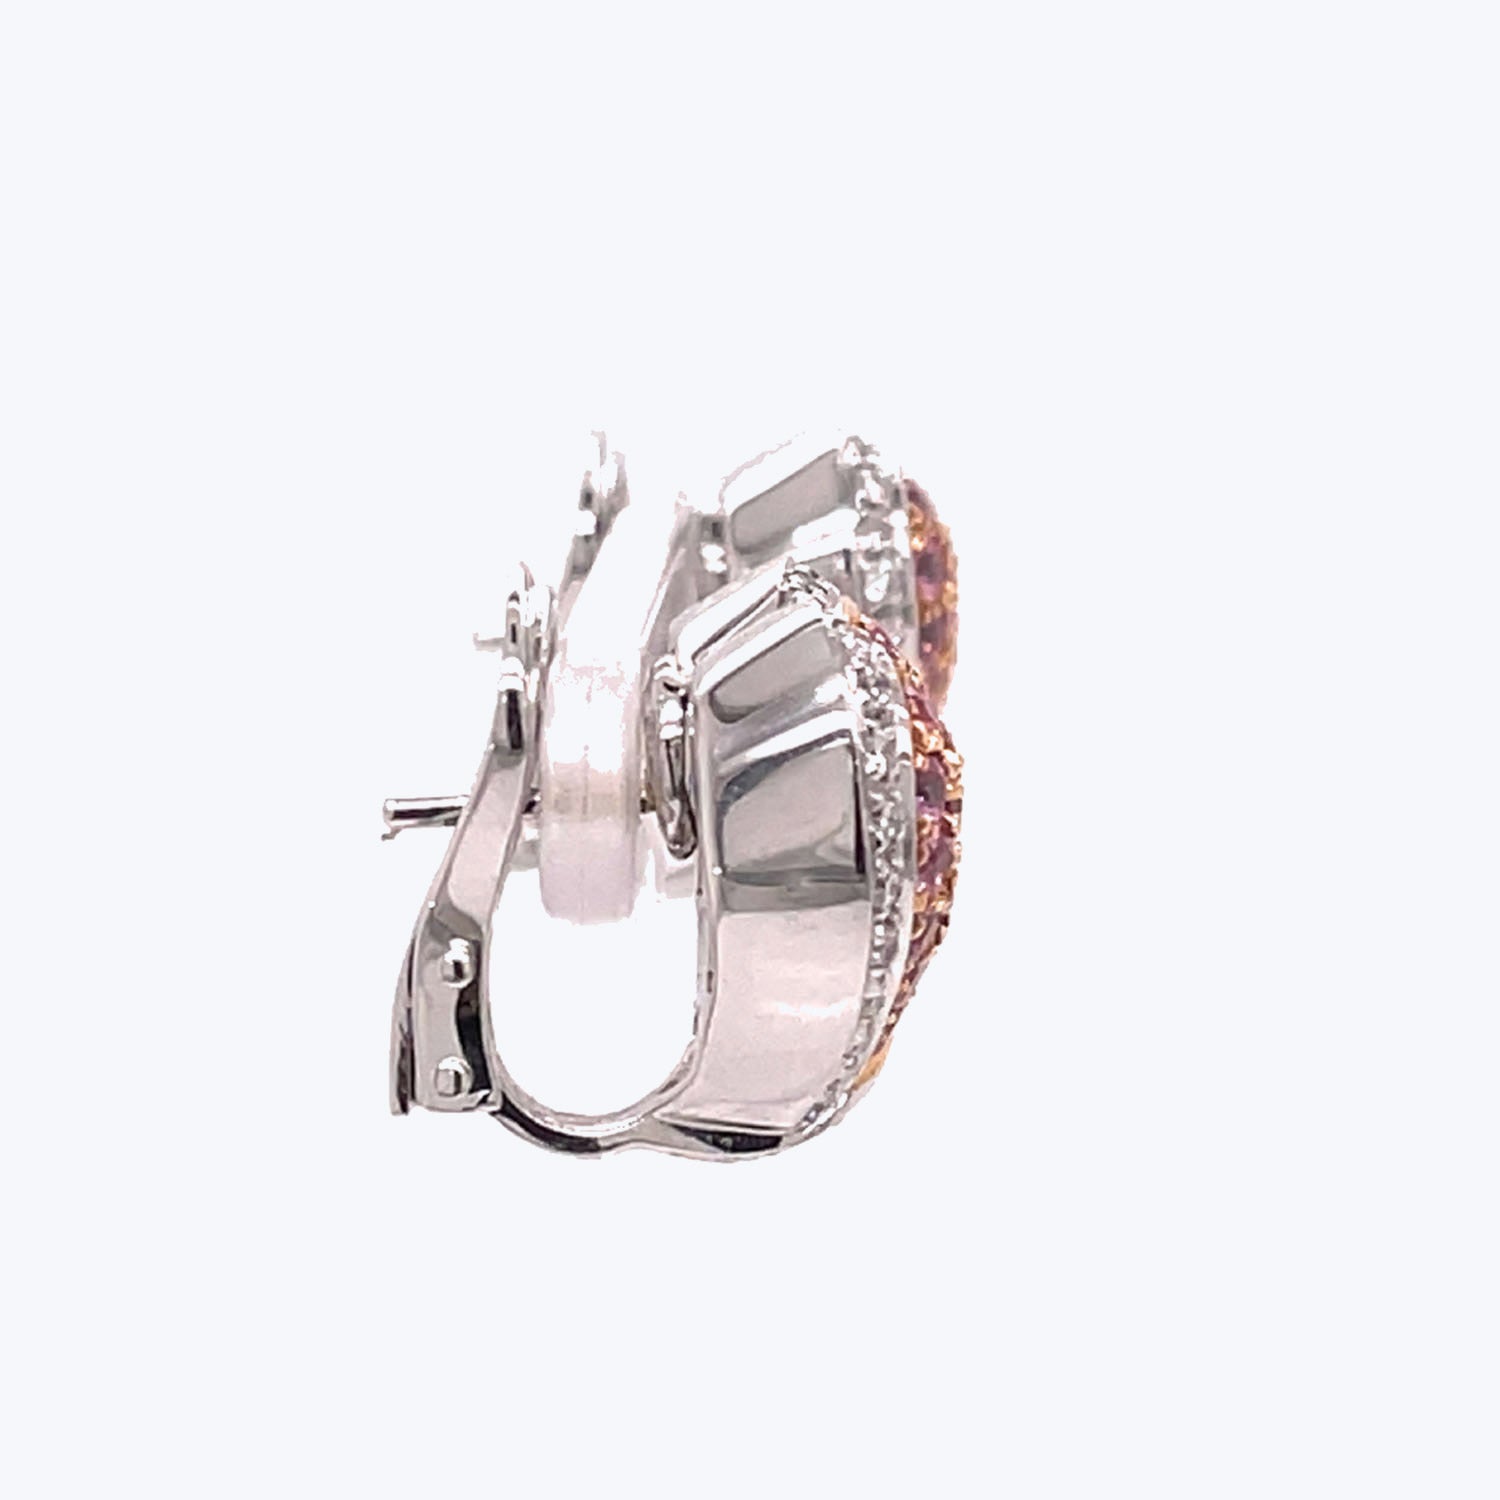 Elegant silver-toned hoop earring with pinkish gemstone embellishments.